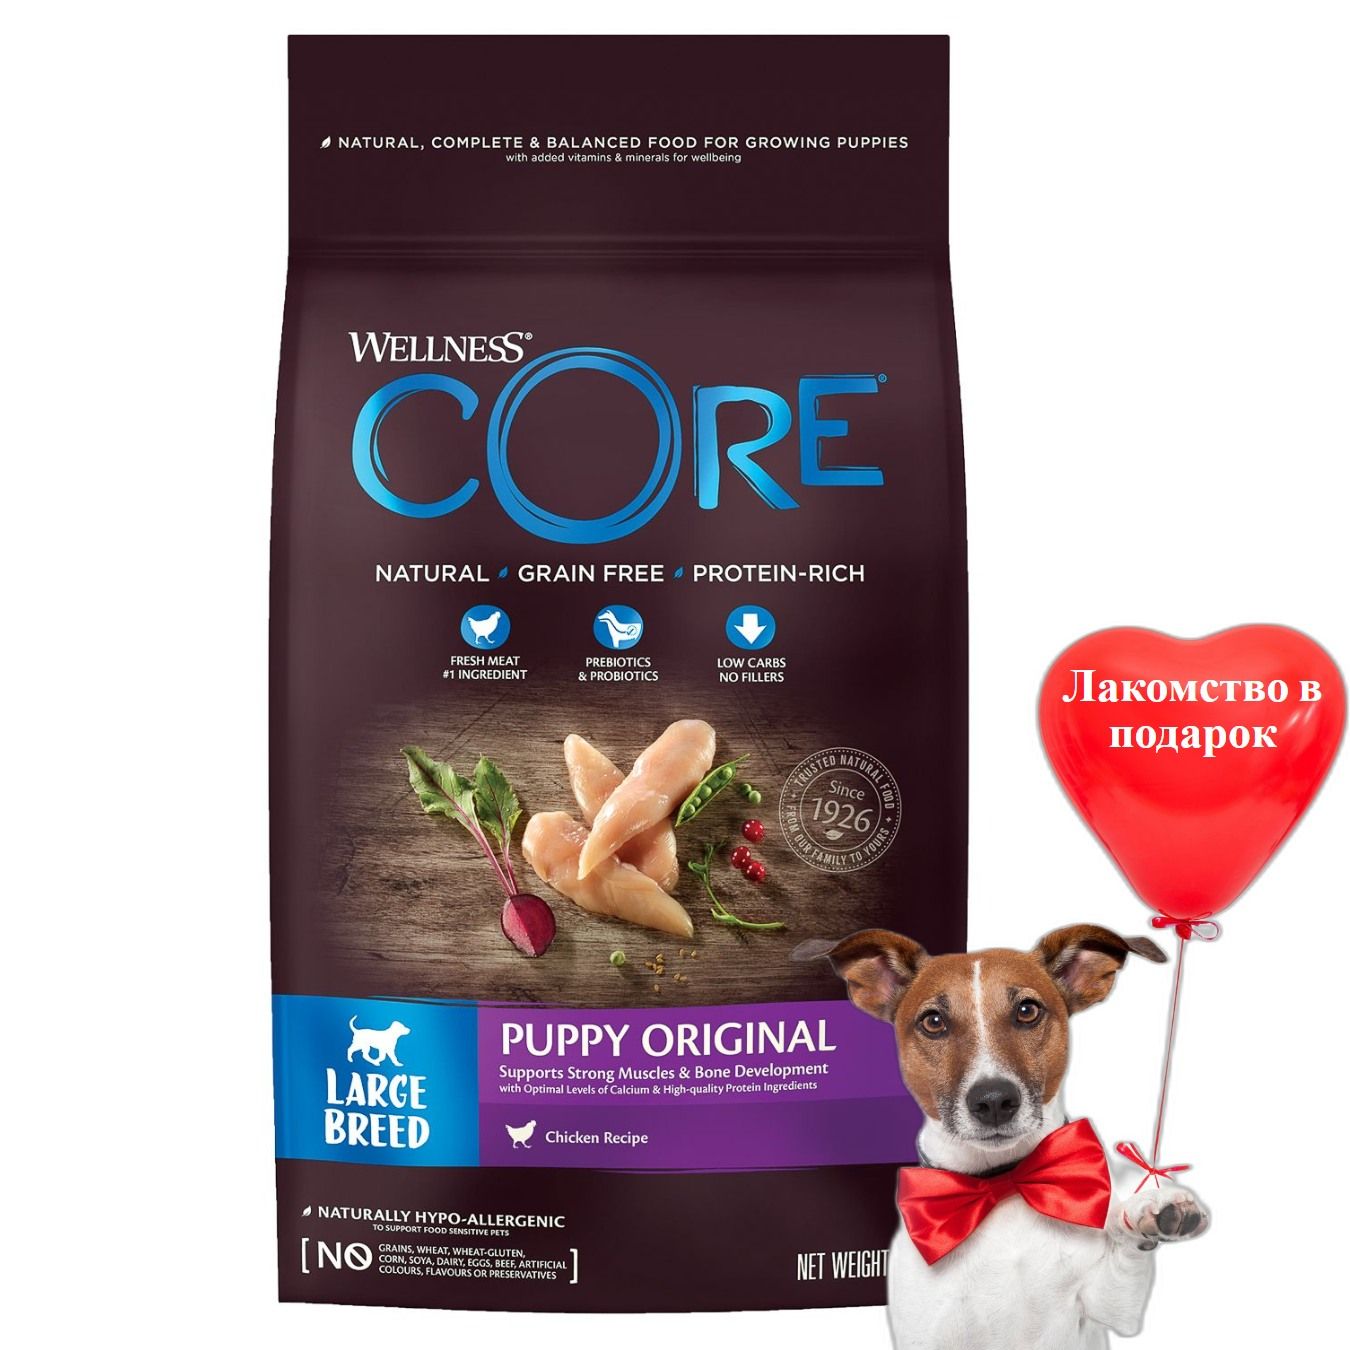 Wellness core корм для собак. Wellness Core для щенков мелких пород. Wellness корм Dog i co. Cat co Wellness корм. Корм Wellness Core с тунцом.